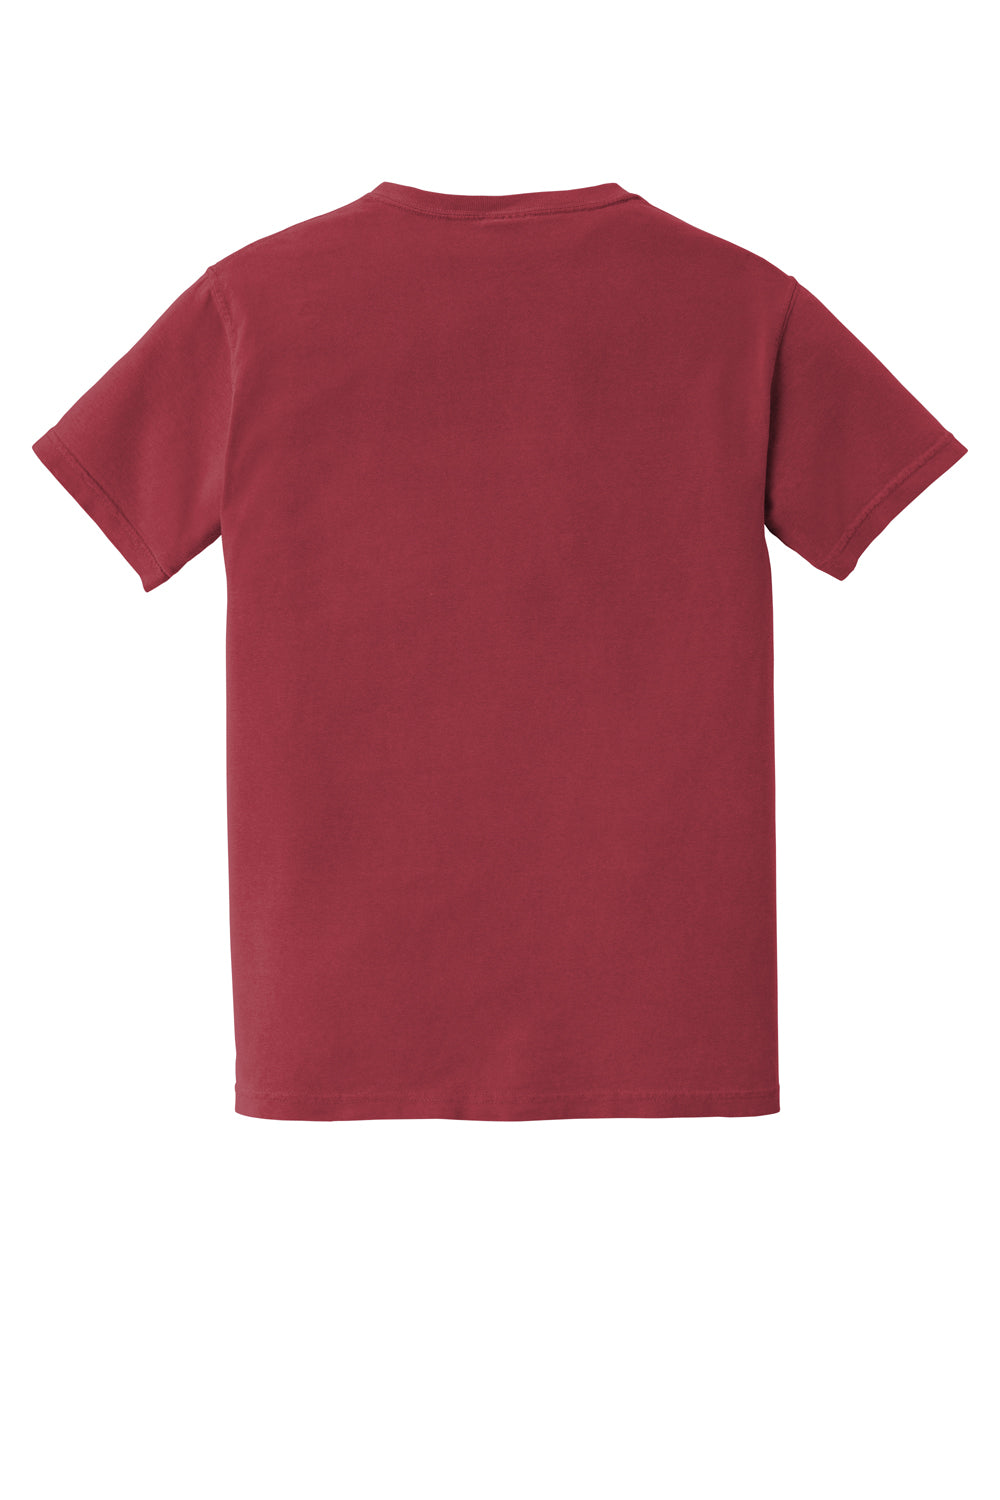 Comfort Colors Mens Short Sleeve Crewneck T-Shirt w/ Pocket Chili Red Flat Back